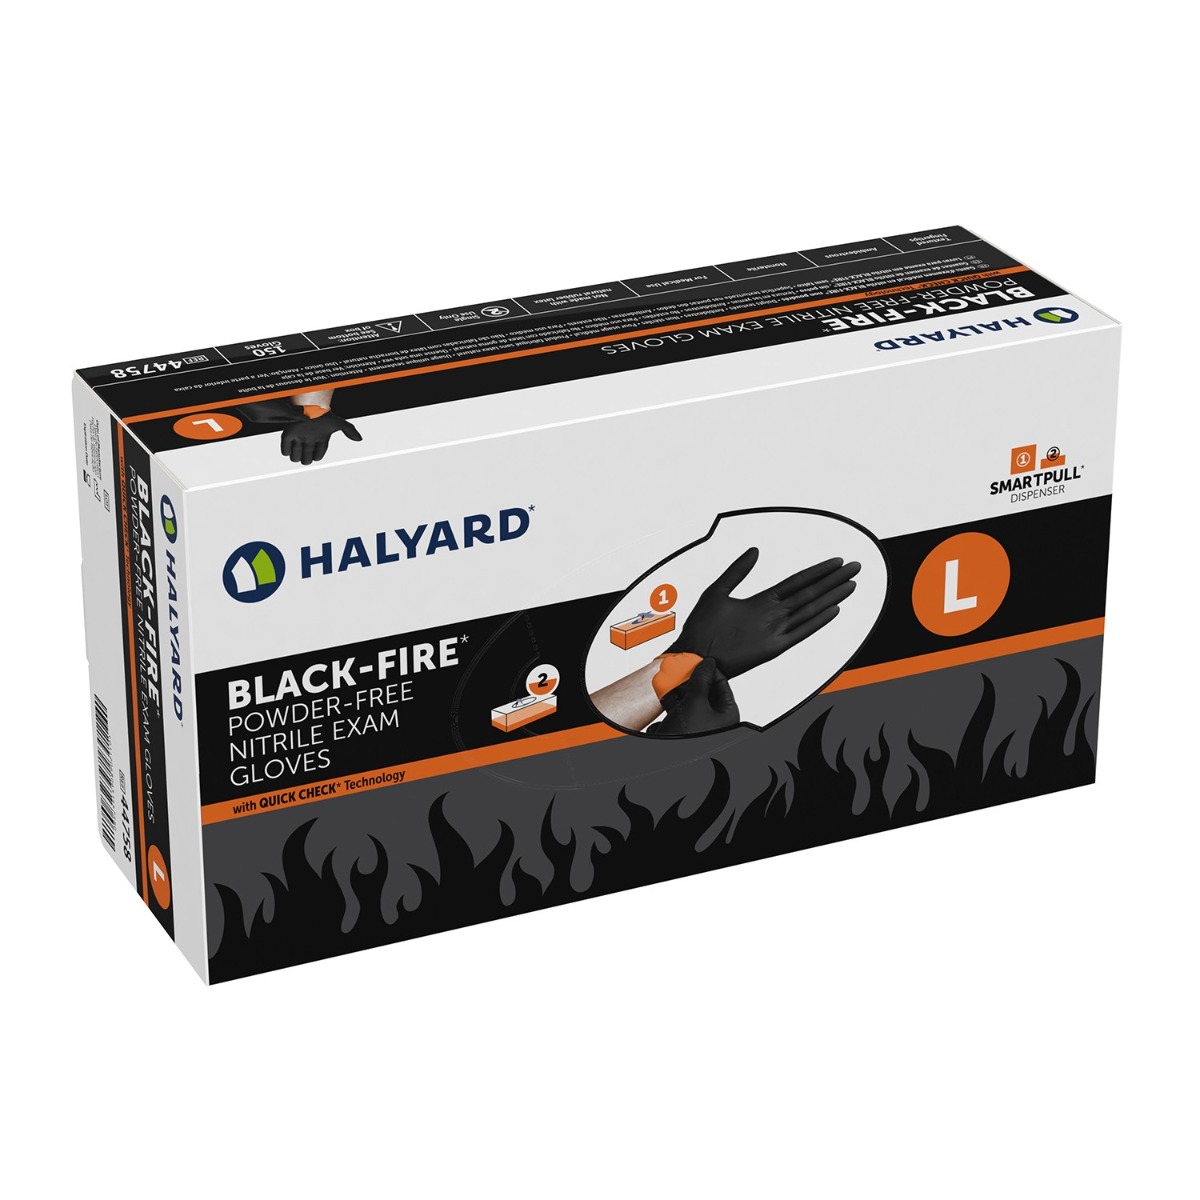 Halyard Black-Fire Powder-Free Nitrile Exam Gloves no packaging